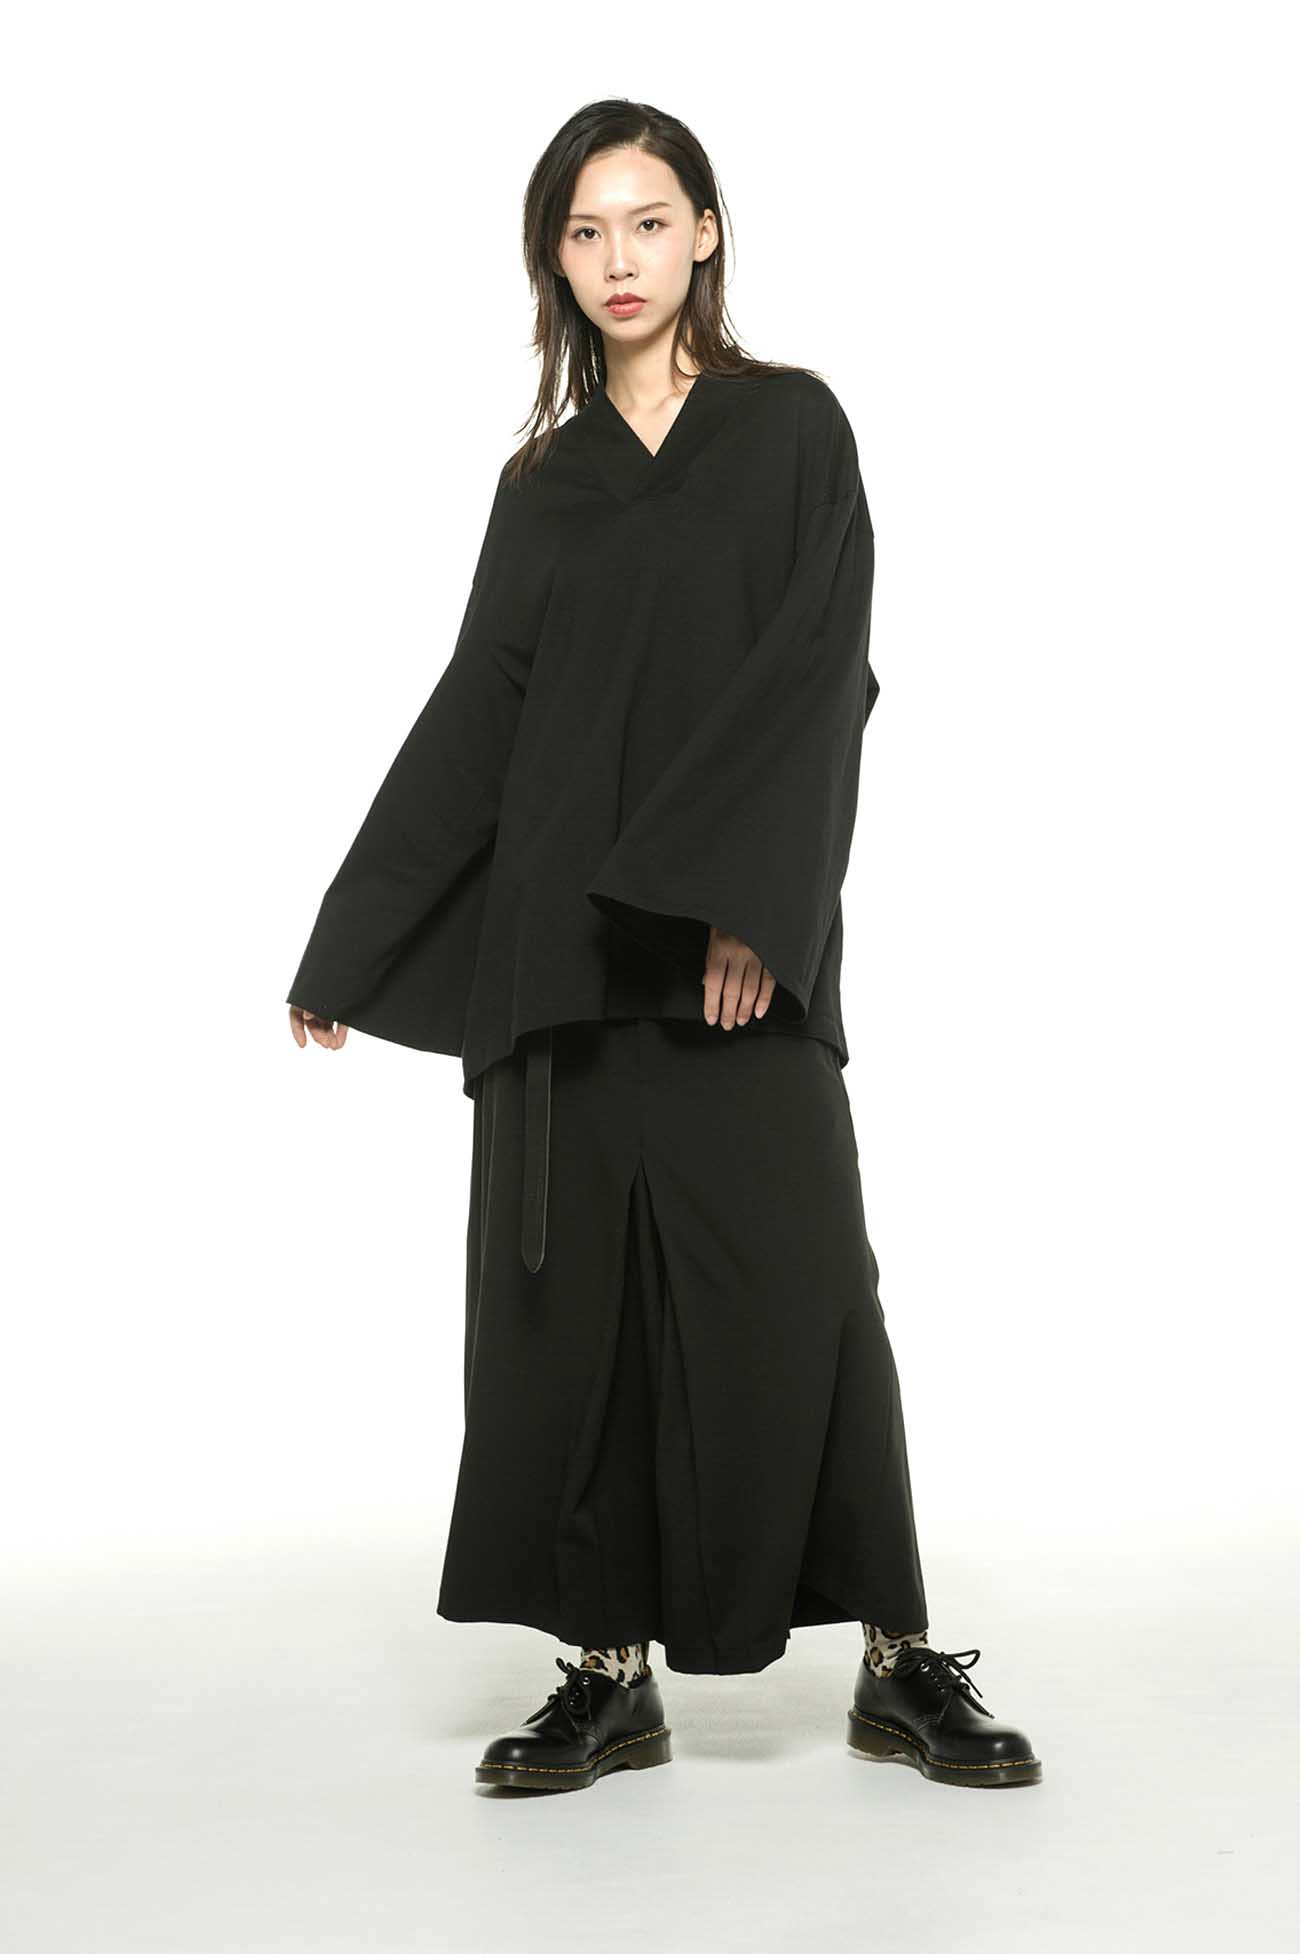 40/2 Cotton Jersey Kimono Layered Vneck 6part Length Sleeve Pullover